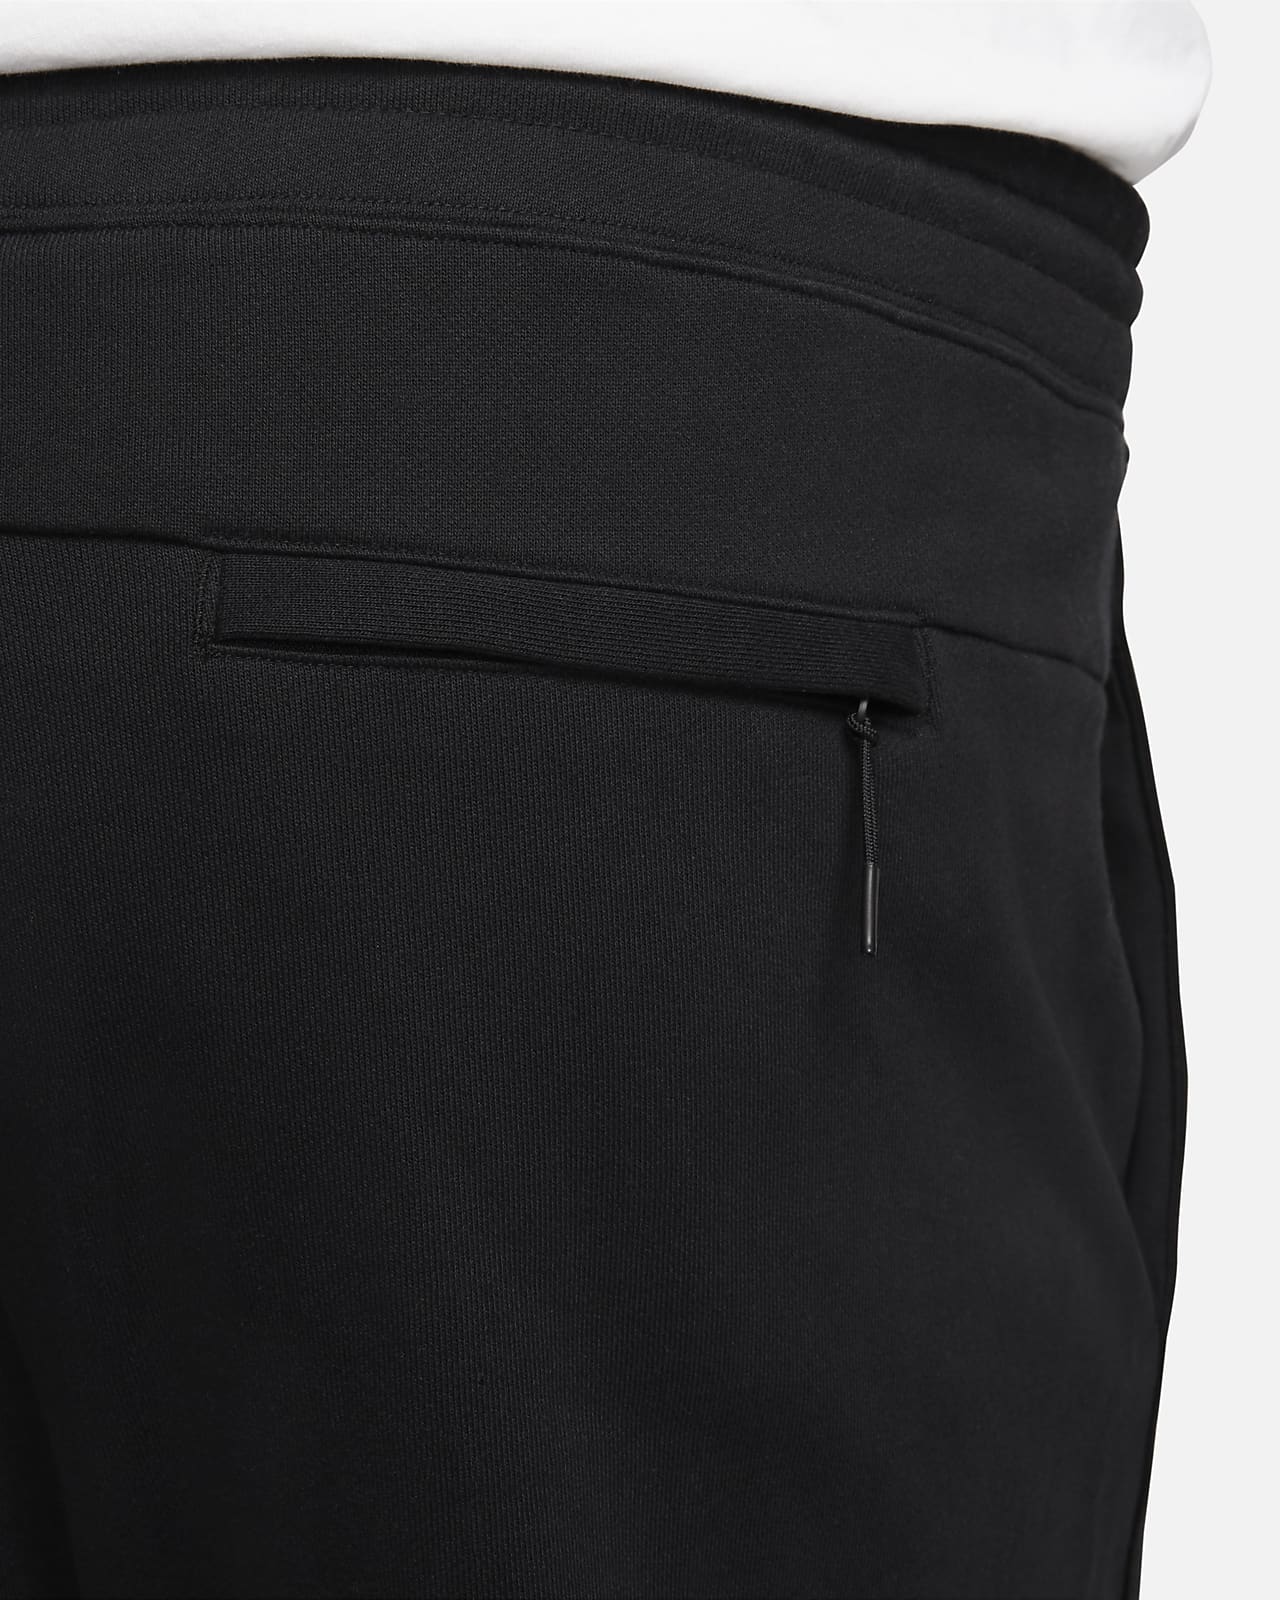 Nike Swoosh Cuffed Sweatpants in Black for Men